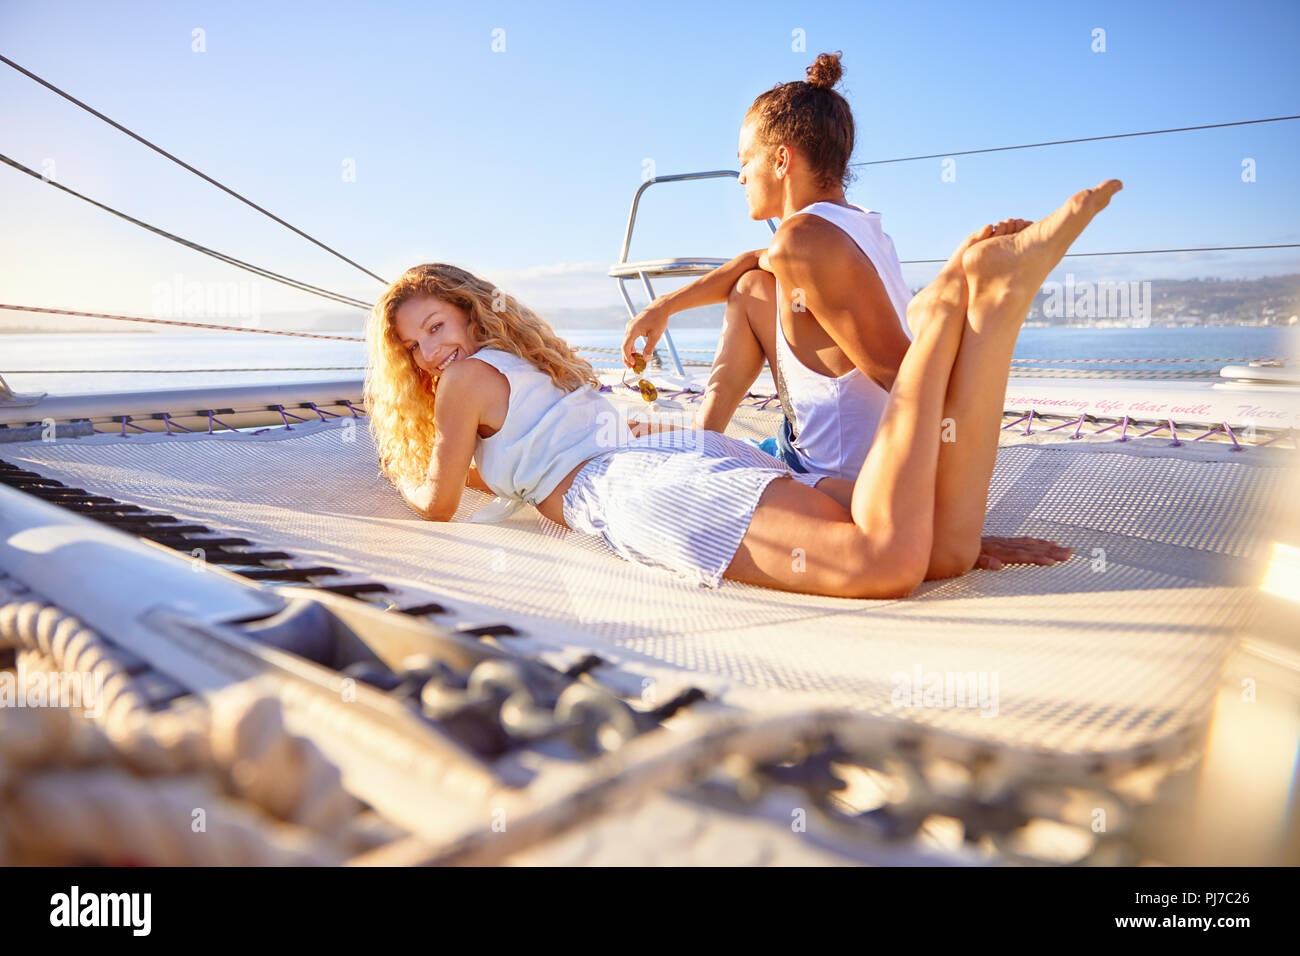 Portrait of smiling woman relaxing on catamaran ensoleillée Banque D'Images